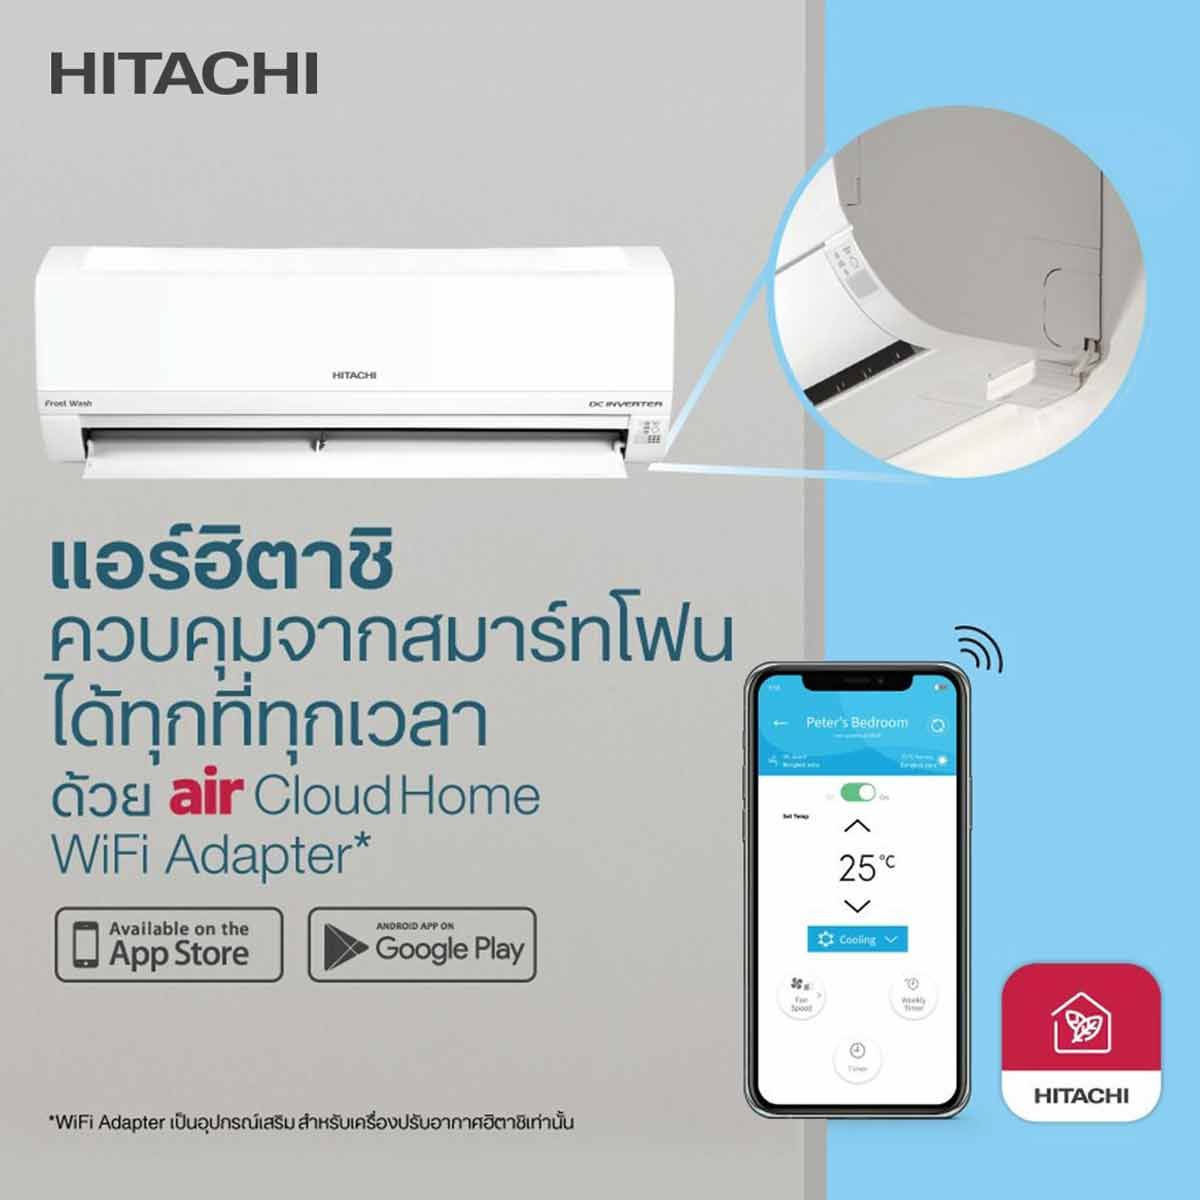 HITACHI airCloud Home Wifi Adapter รุ่น SPX-WFG02S